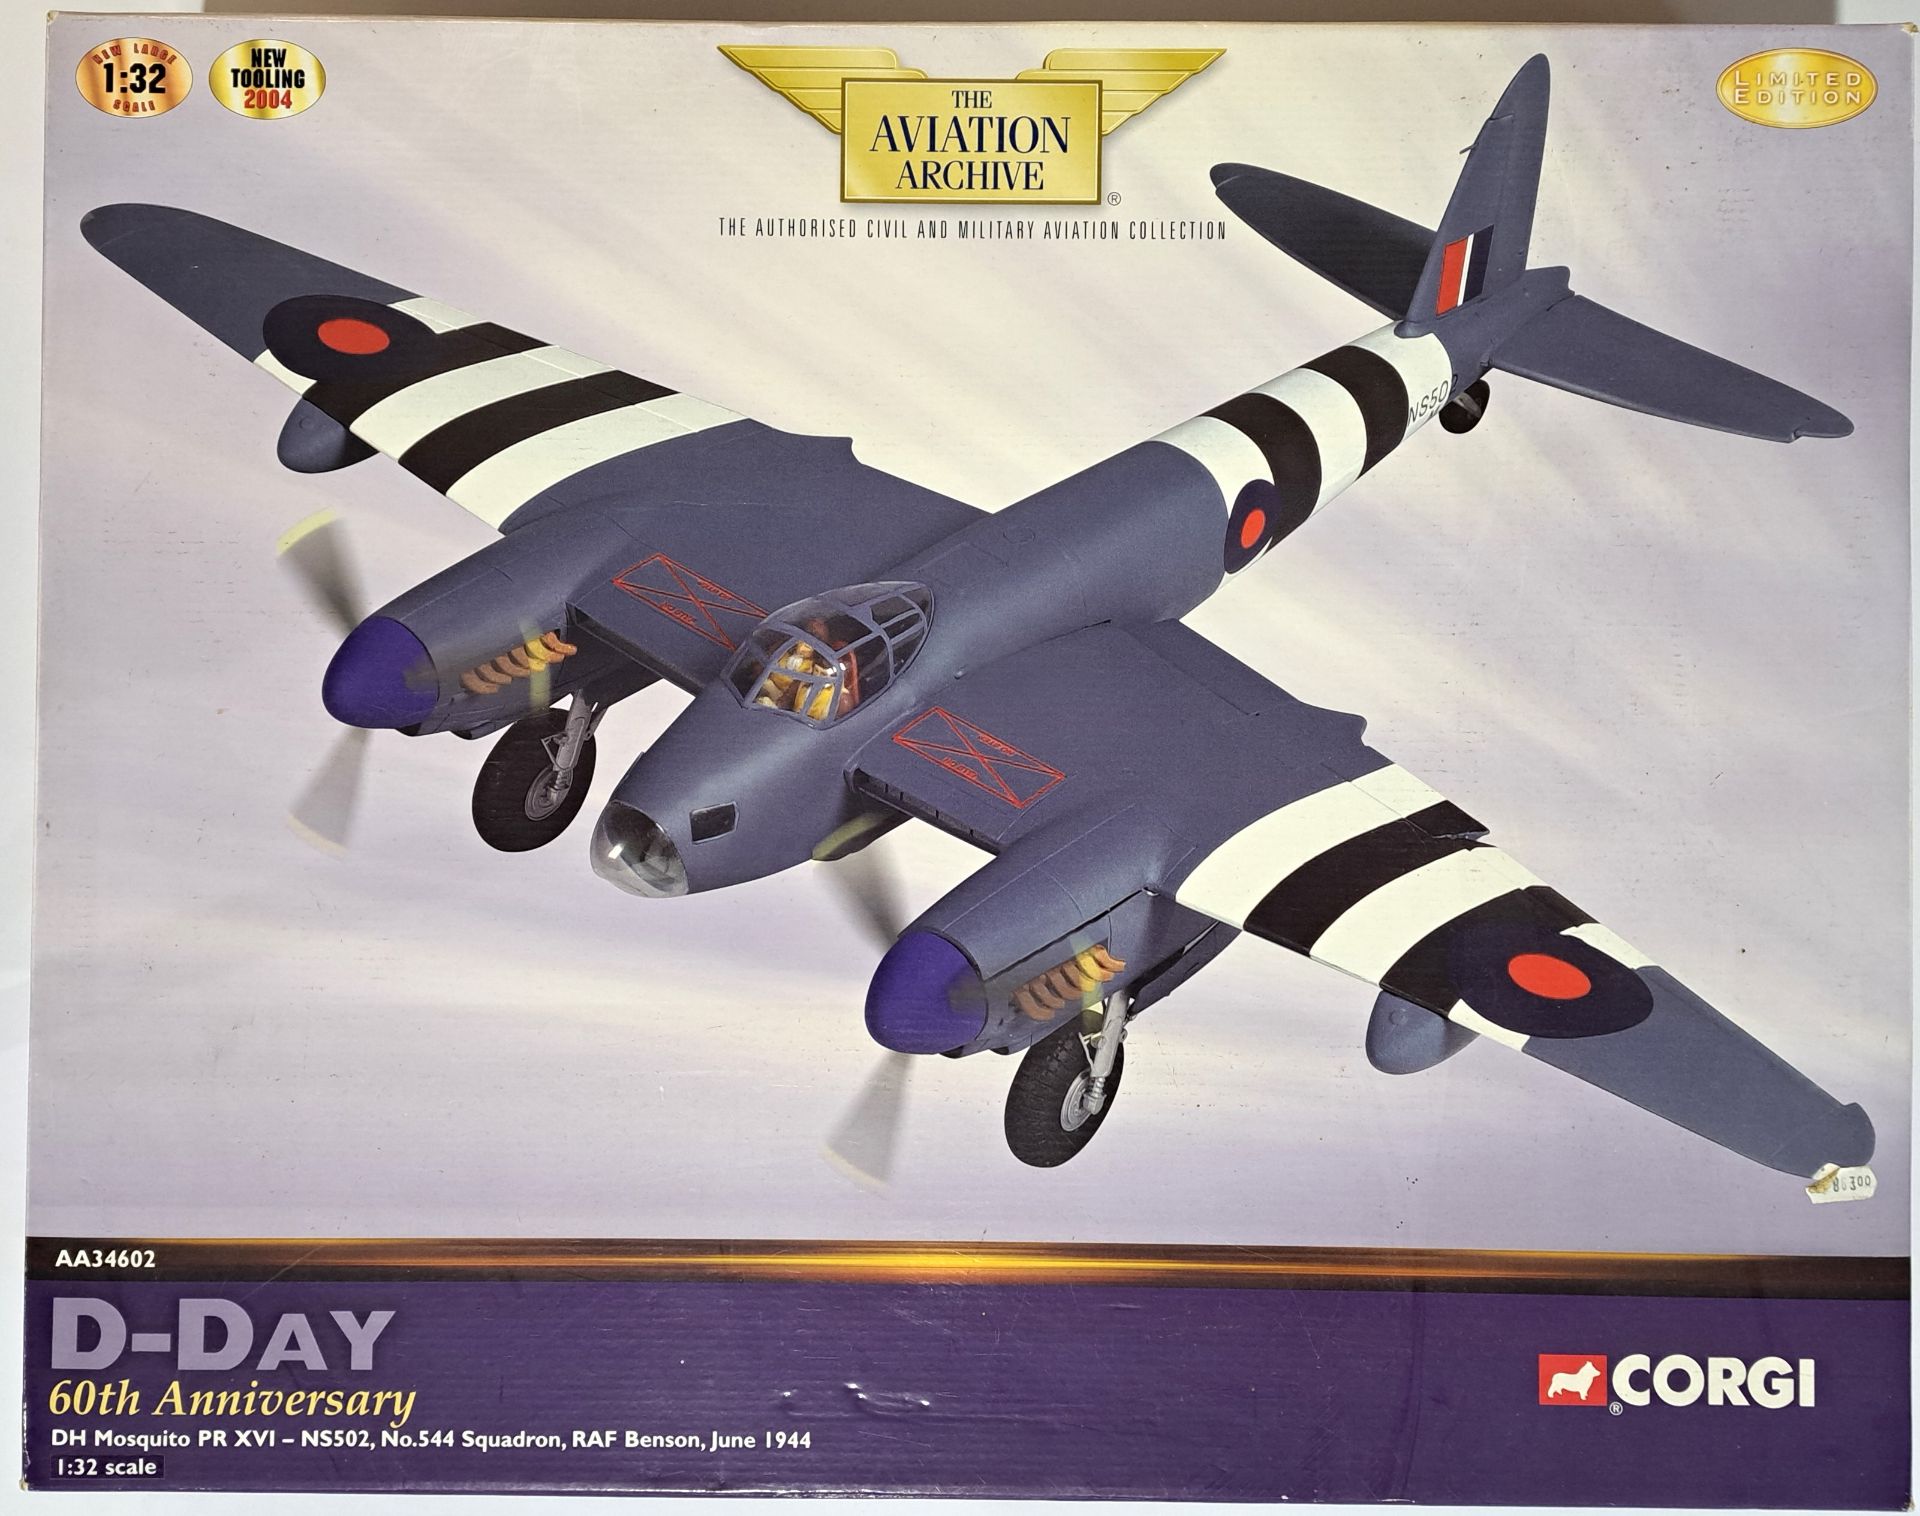 Corgi Aviation Archive boxed 1:32 scale AA34602 - Image 3 of 3